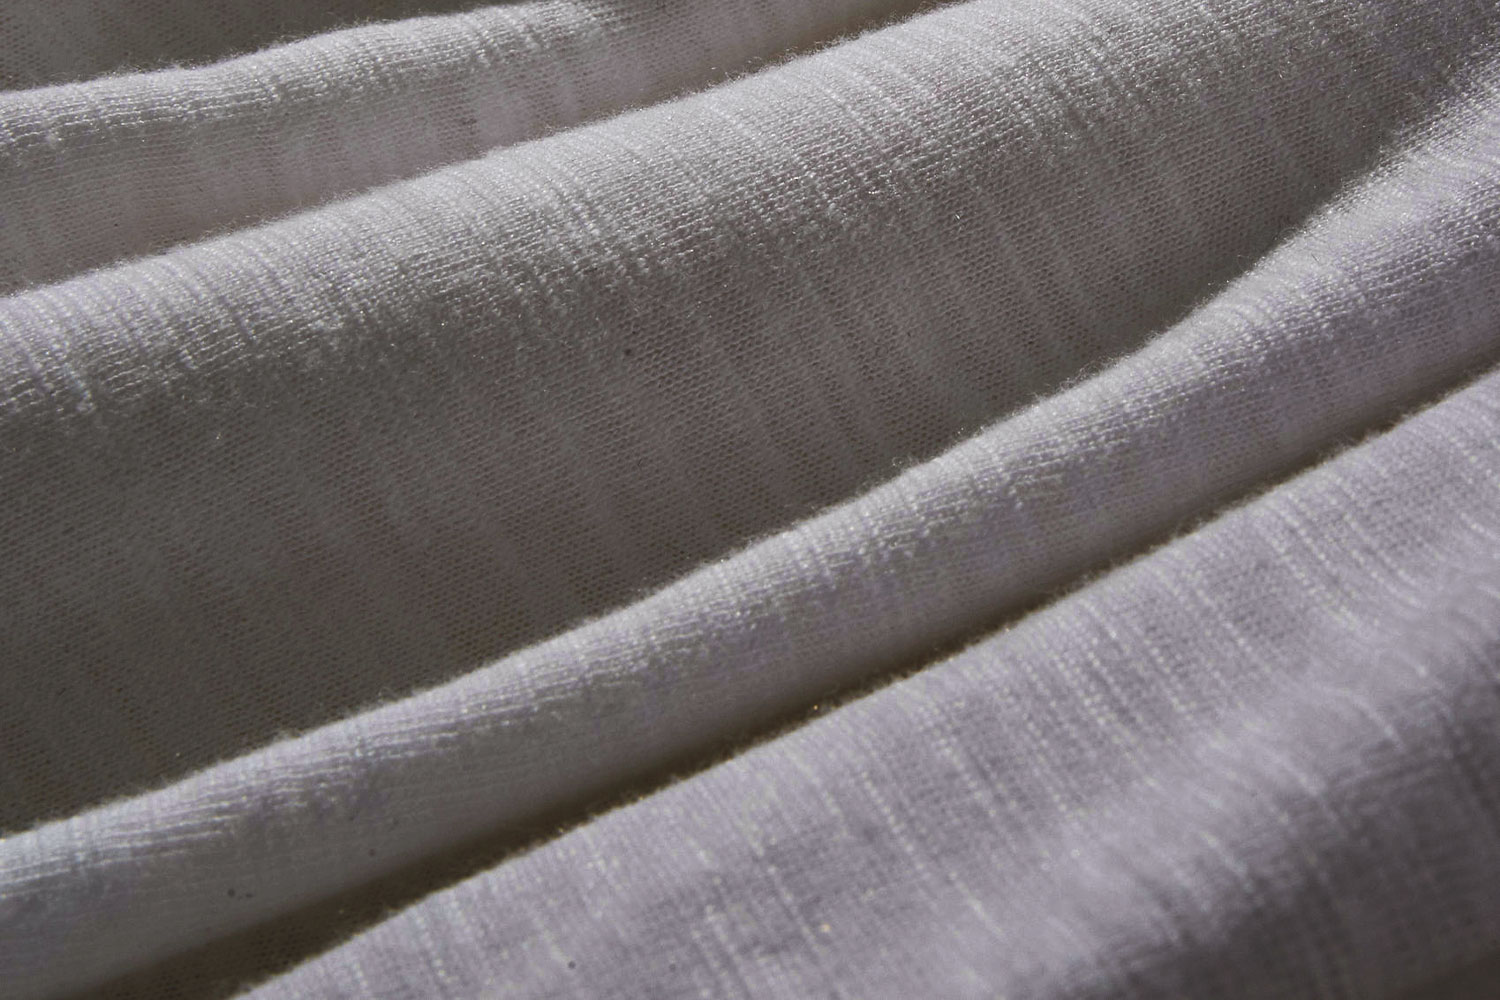 A close-up image of draped grey rayon fabric.